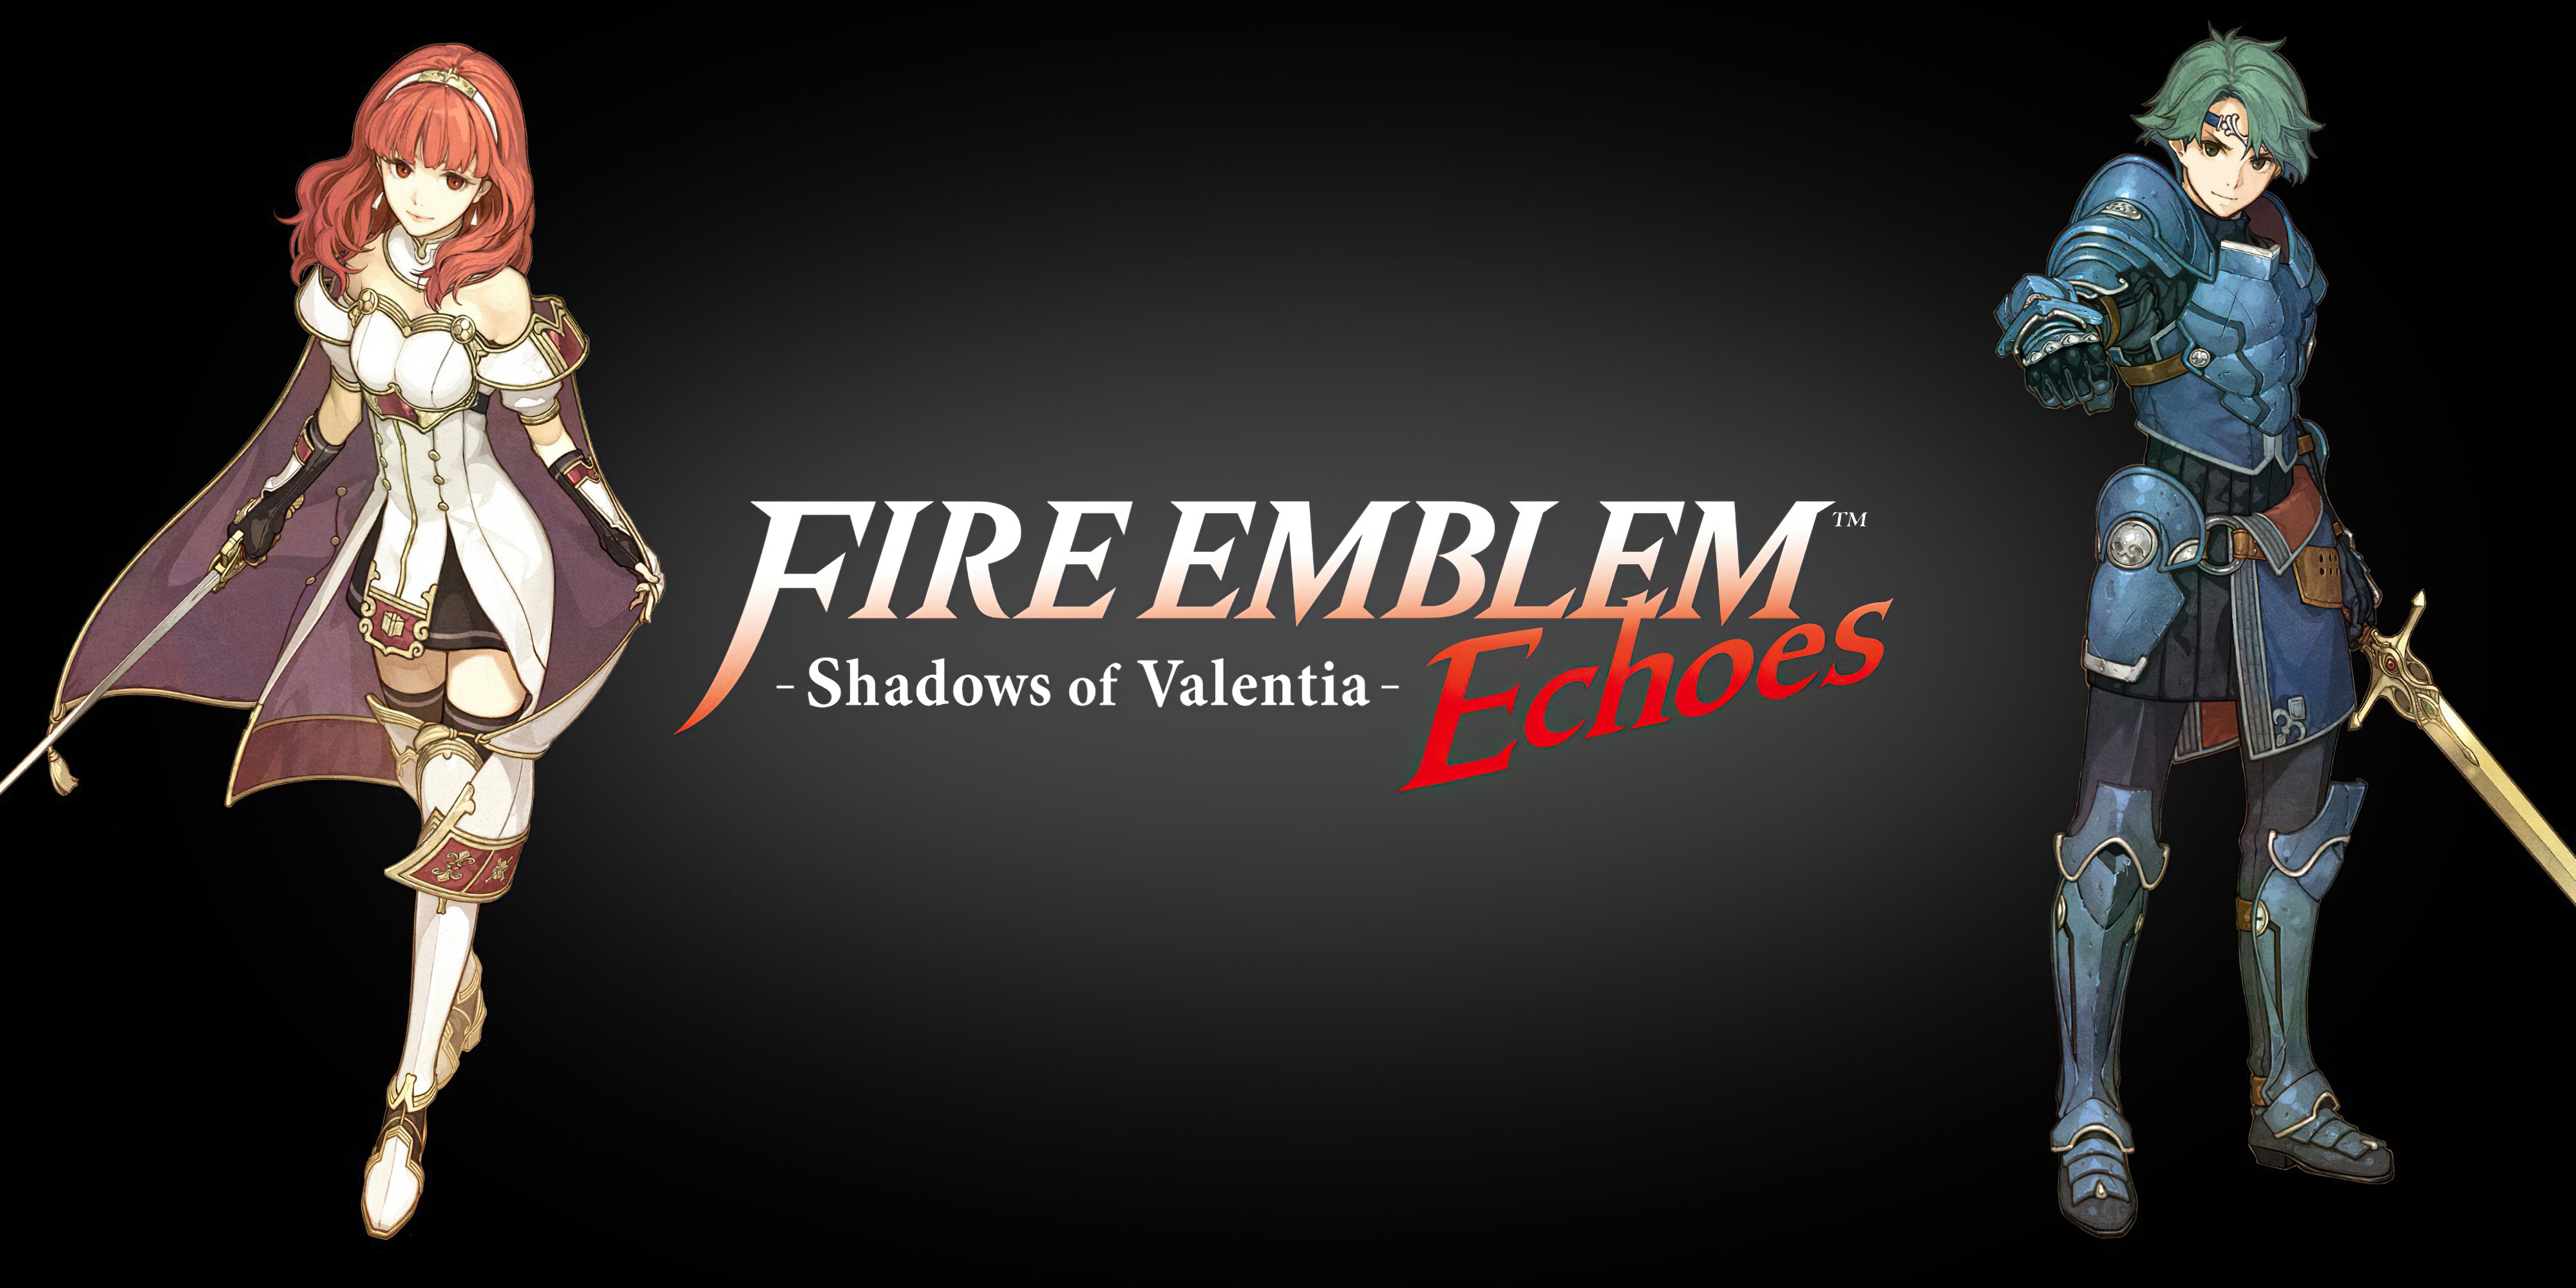 839855 завантажити картинку відеогра, fire emblem echoes: shadows of valentia, альм (емблема вогню), celica (емблема вогню) - шпалери і заставки безкоштовно